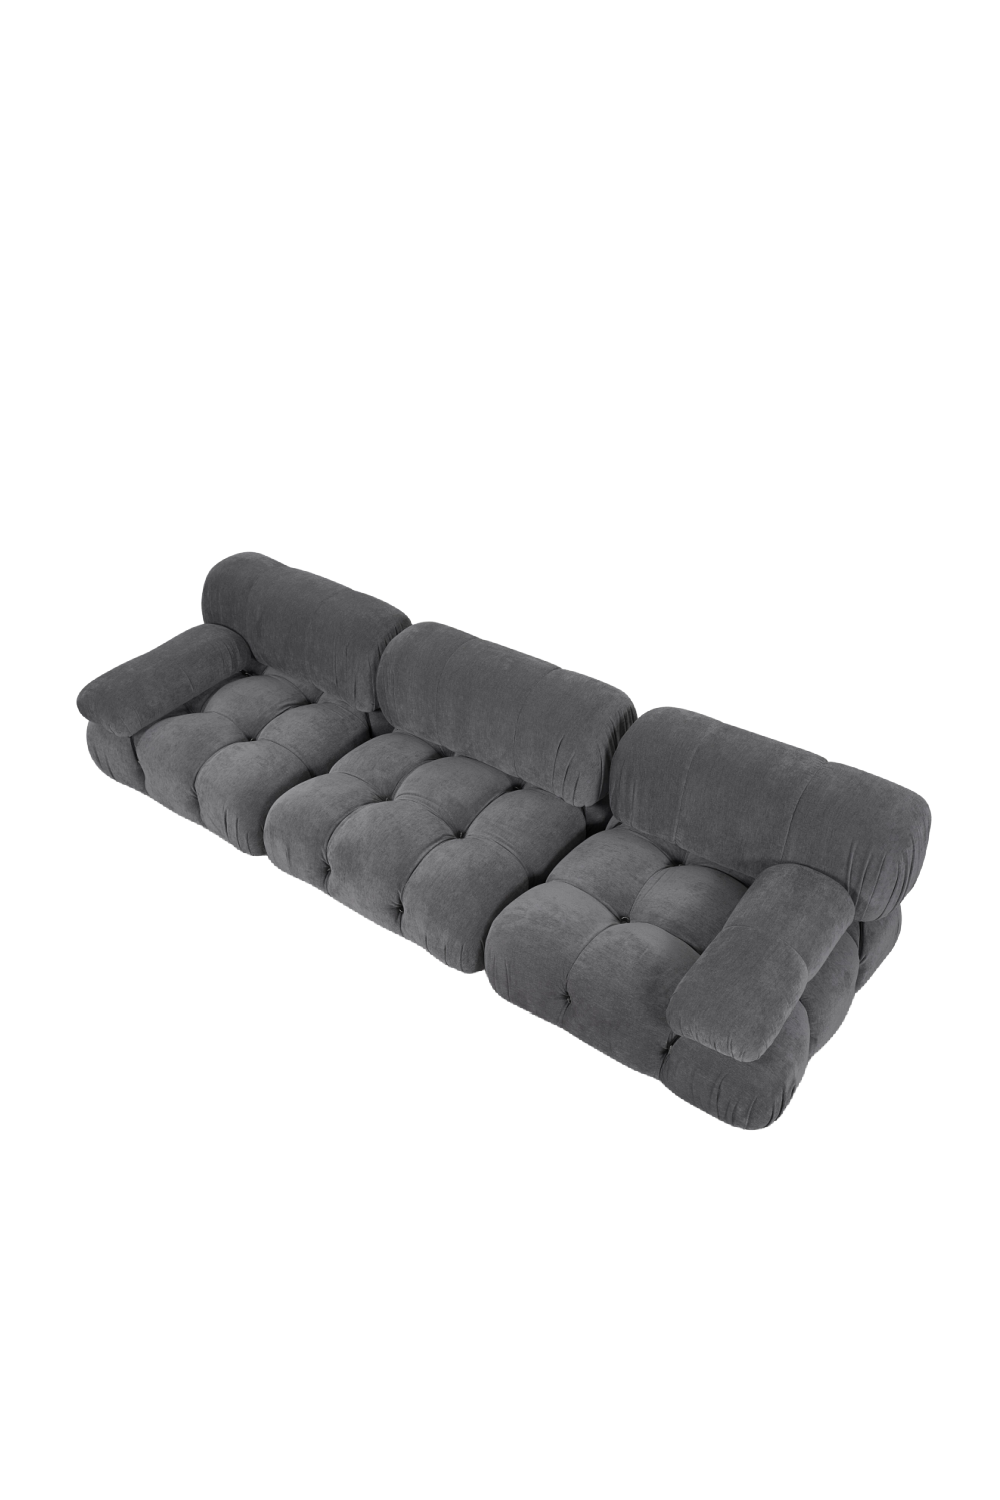 Upholstered Sectional Sofa | Liang & Eimil Combo | Oroa.com